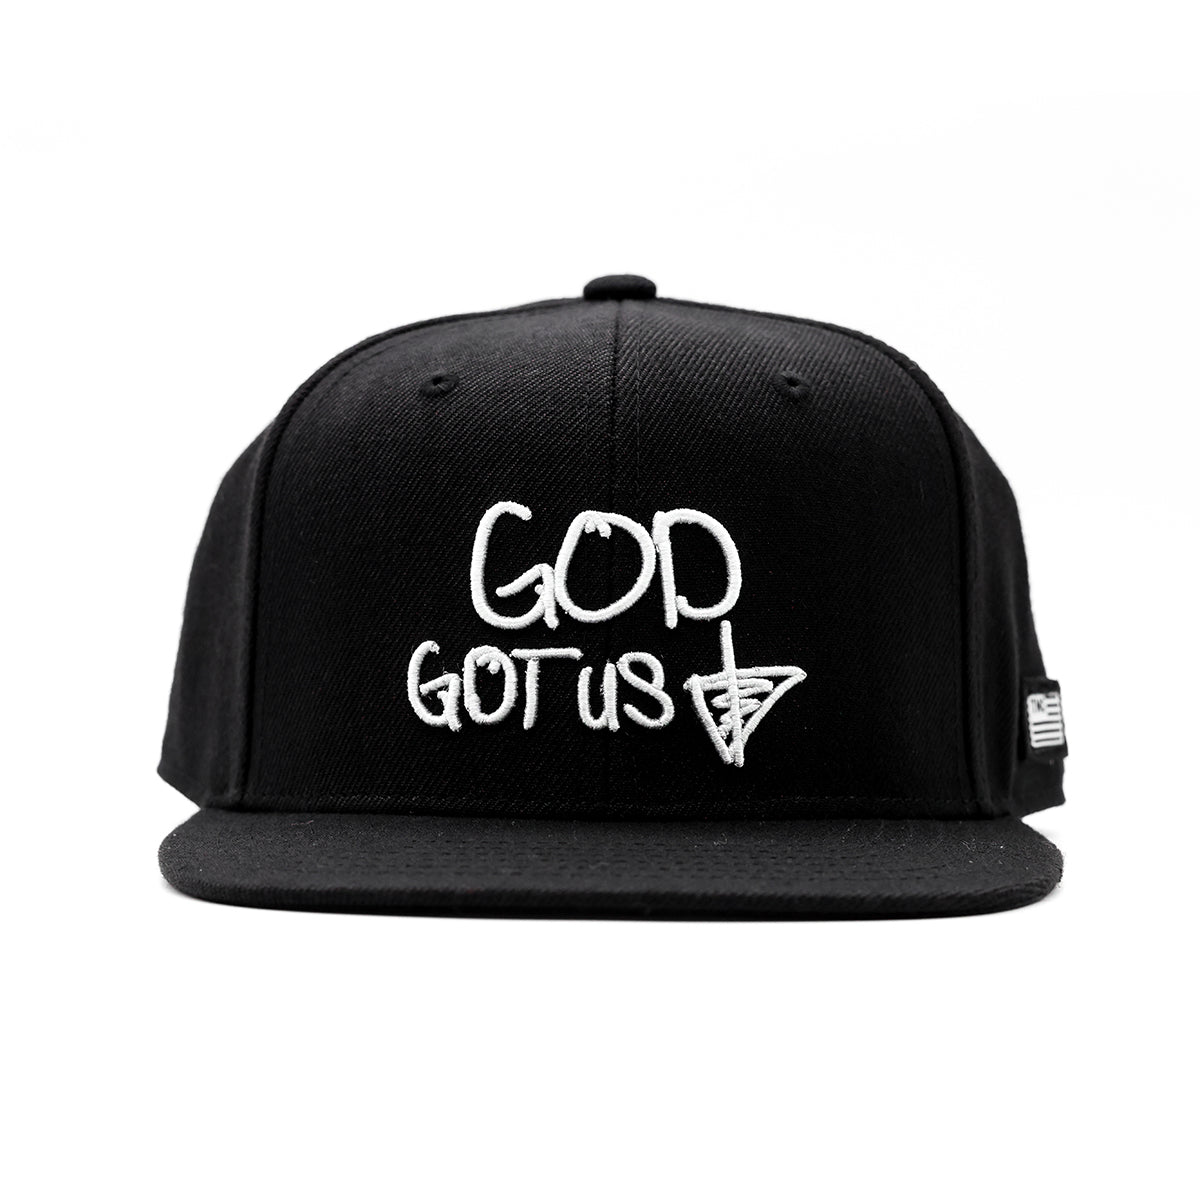 God Got Us Limited Edition Snapback - Black/White - Front